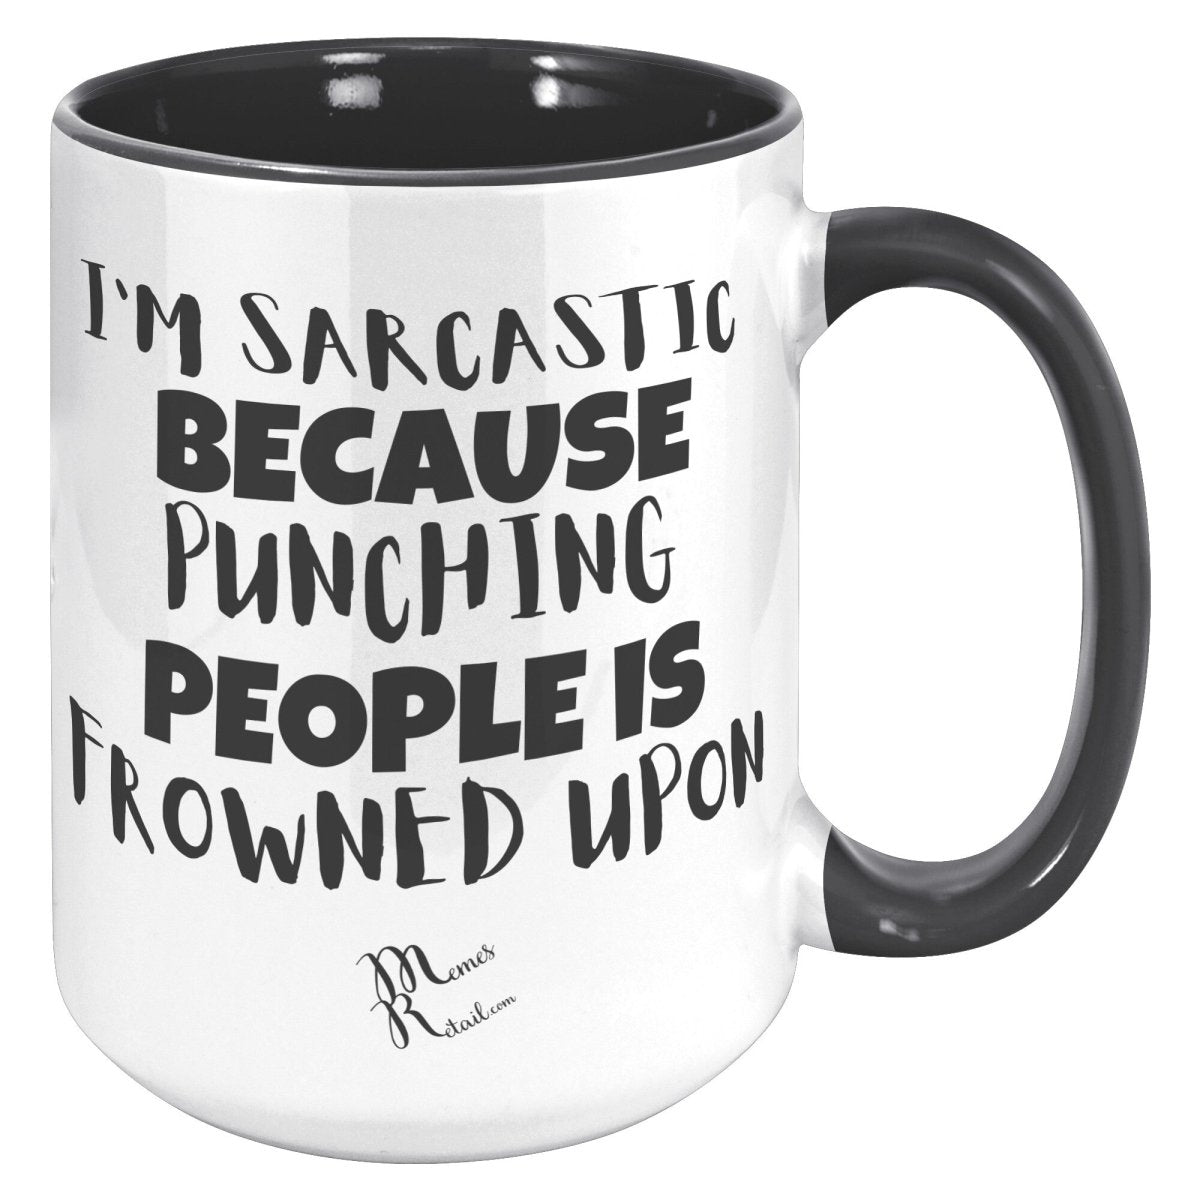 I'm Sarcastic Because Punching People is frowned upon 11oz 15oz Mugs, 15oz Accent Mug / Black - MemesRetail.com